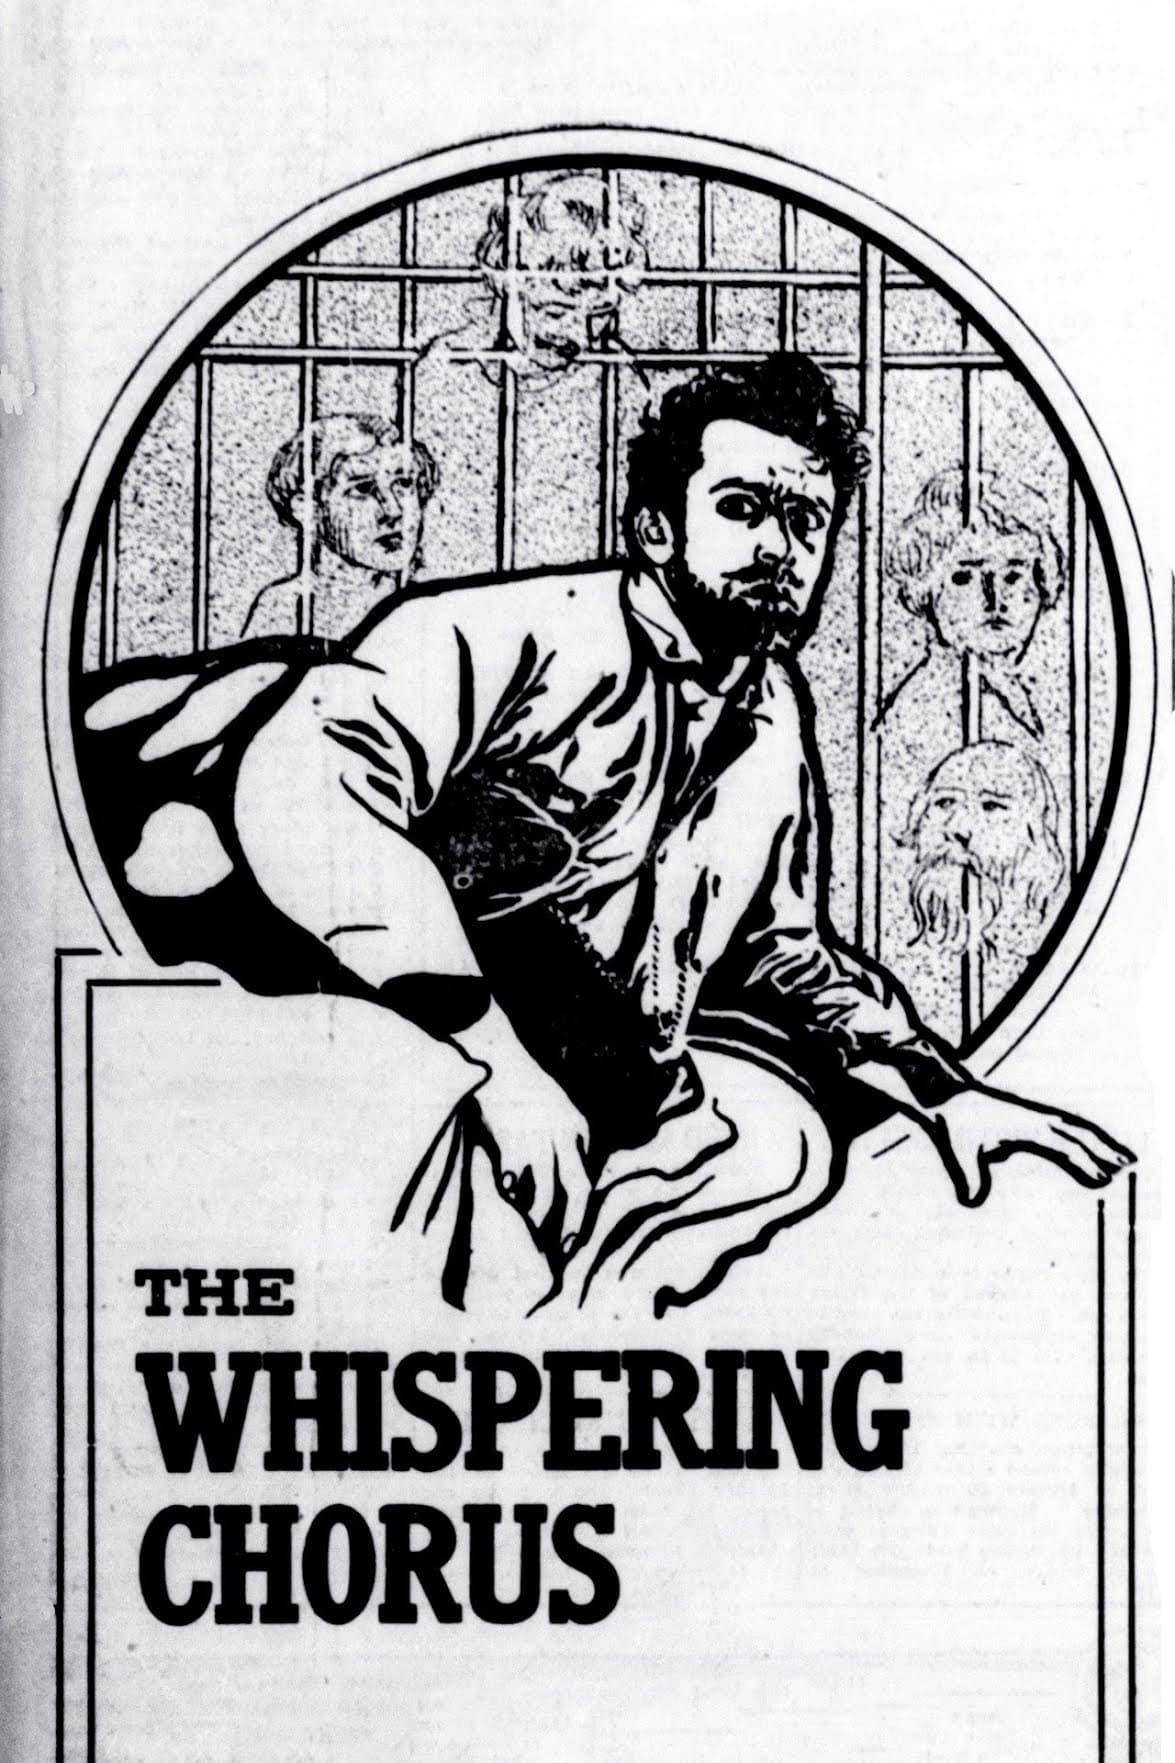 The Whispering Chorus poster